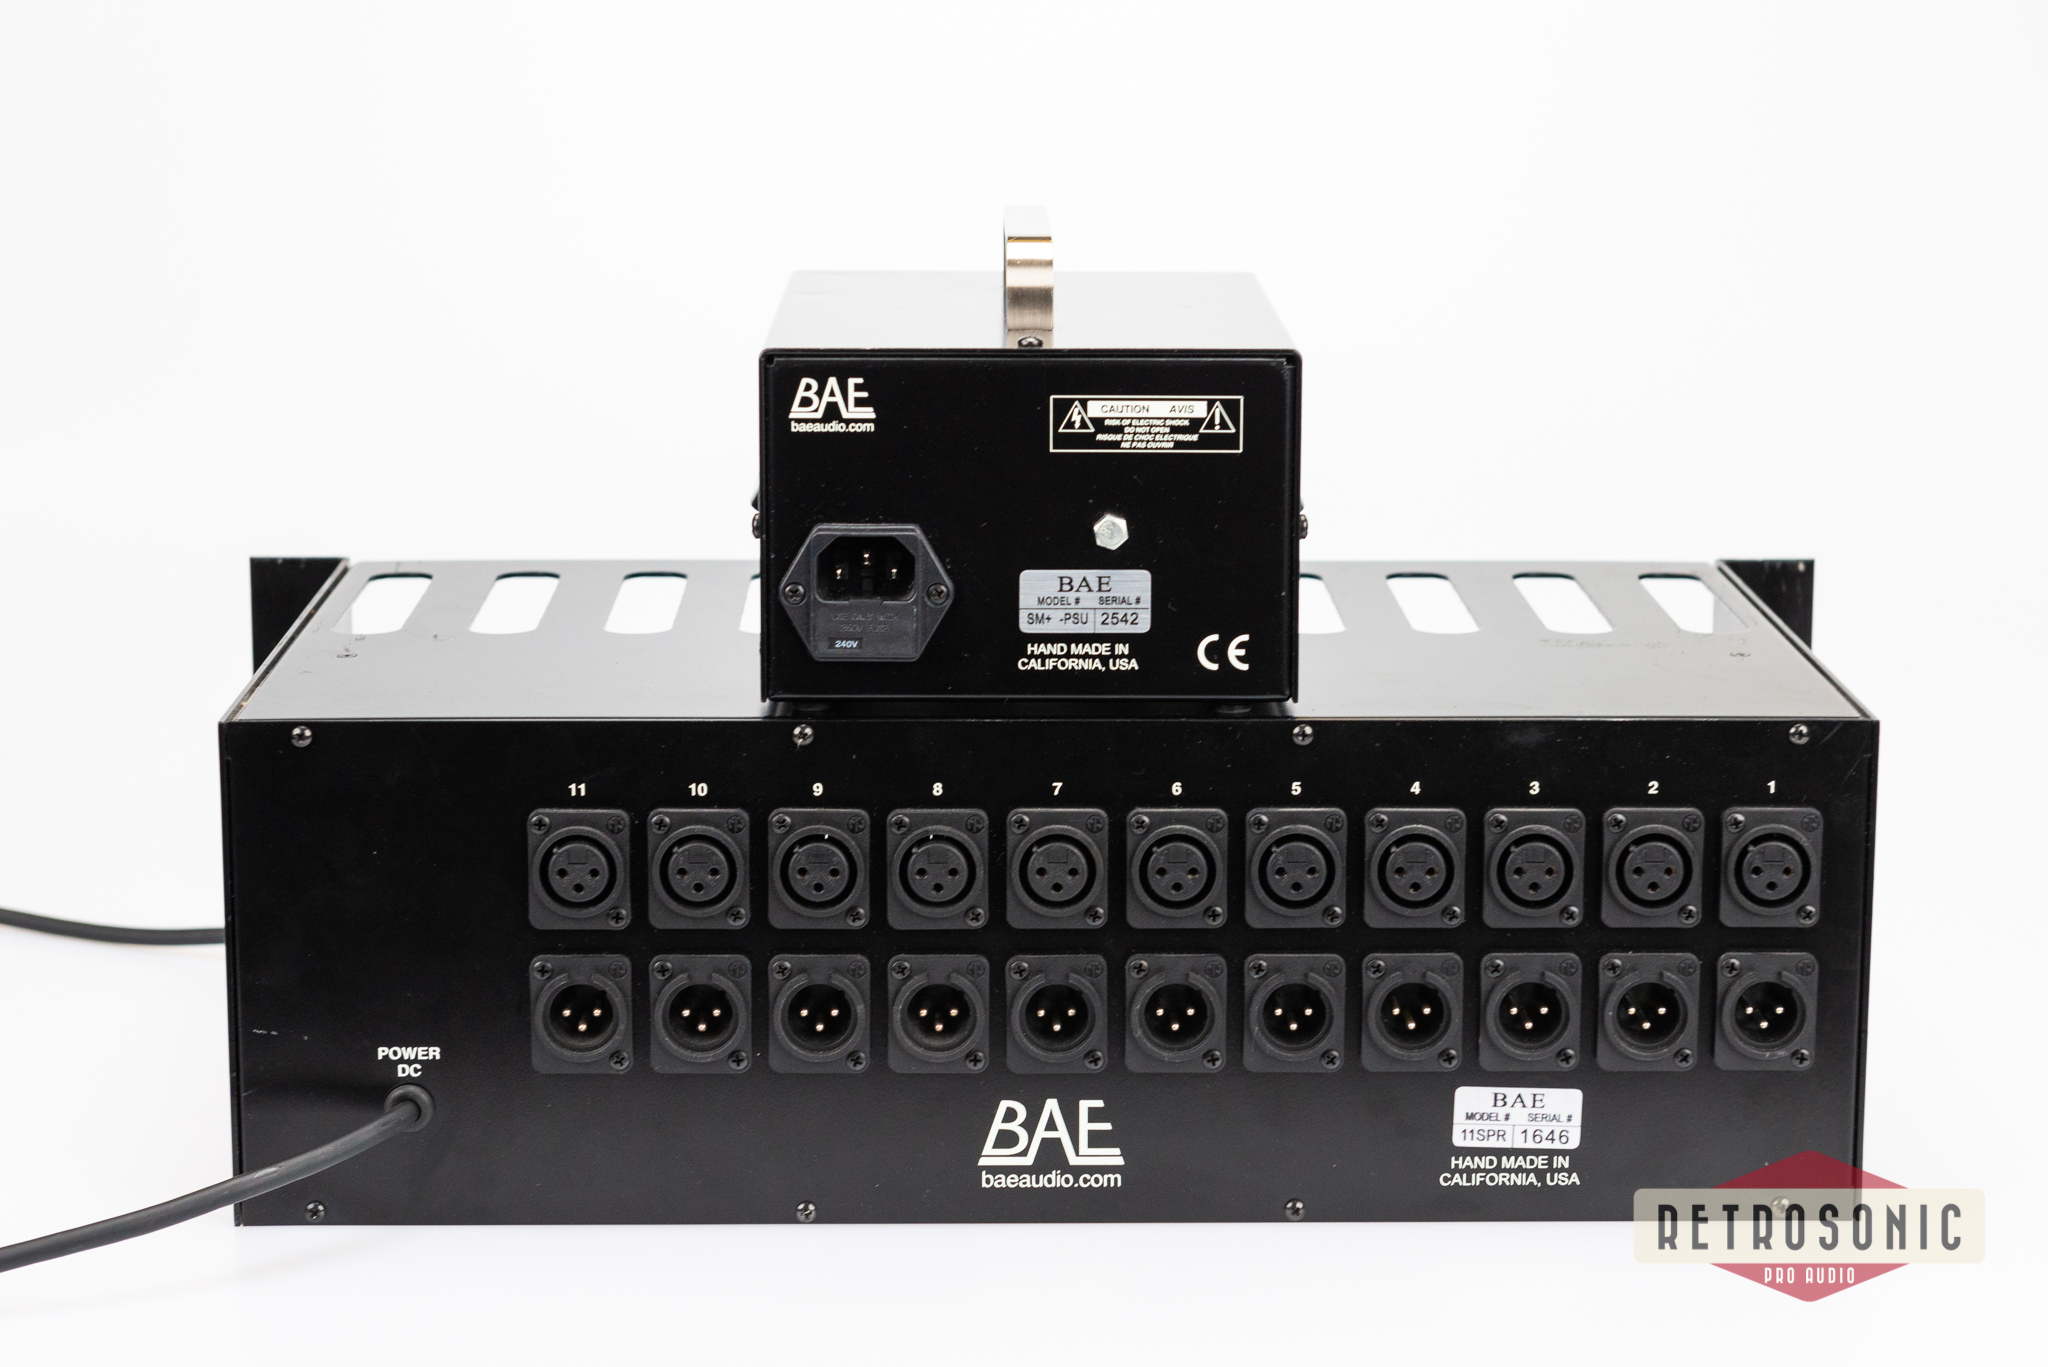 BAE 500 series 11-slot rack